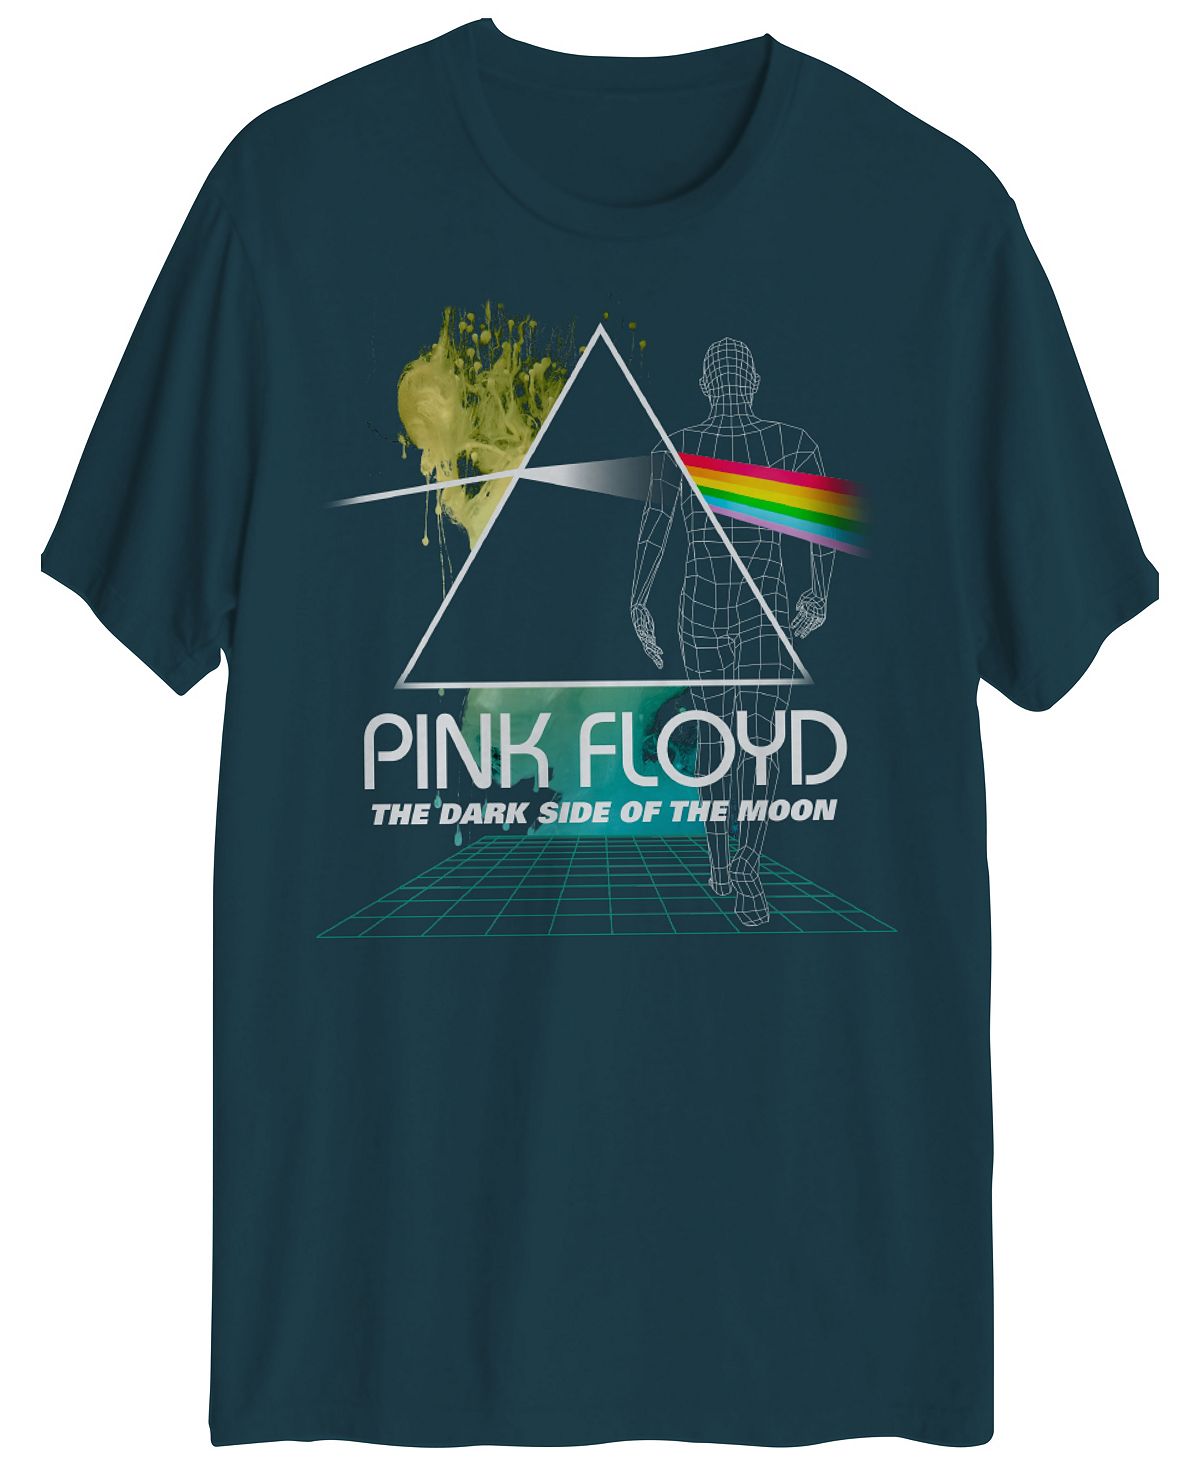 Мужская футболка Pink Floyd с короткими рукавами Hybrid harris john the dark side of the moon the making of the pink floyd masterpiece